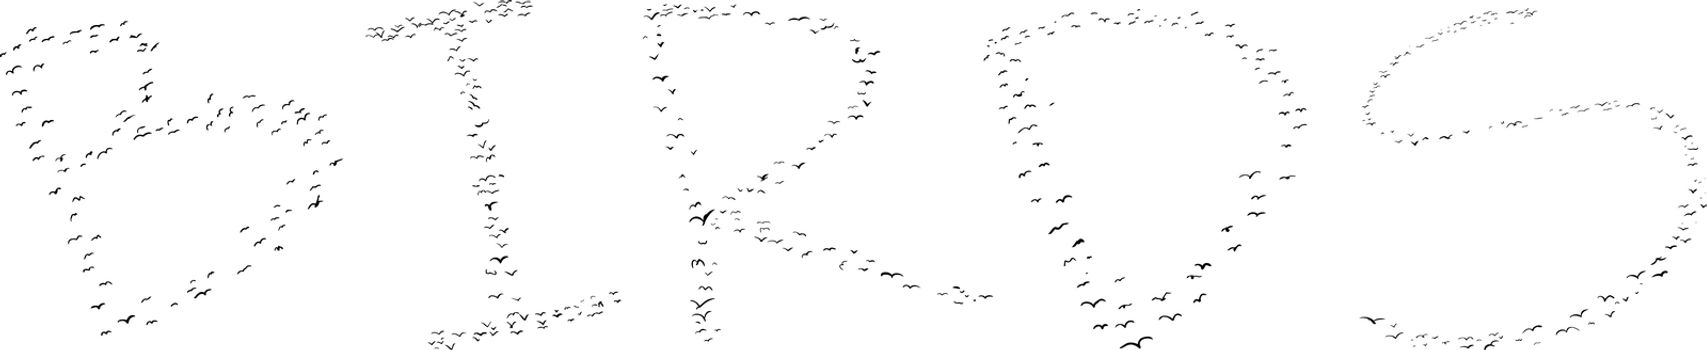 Flock of birds illustration with white background